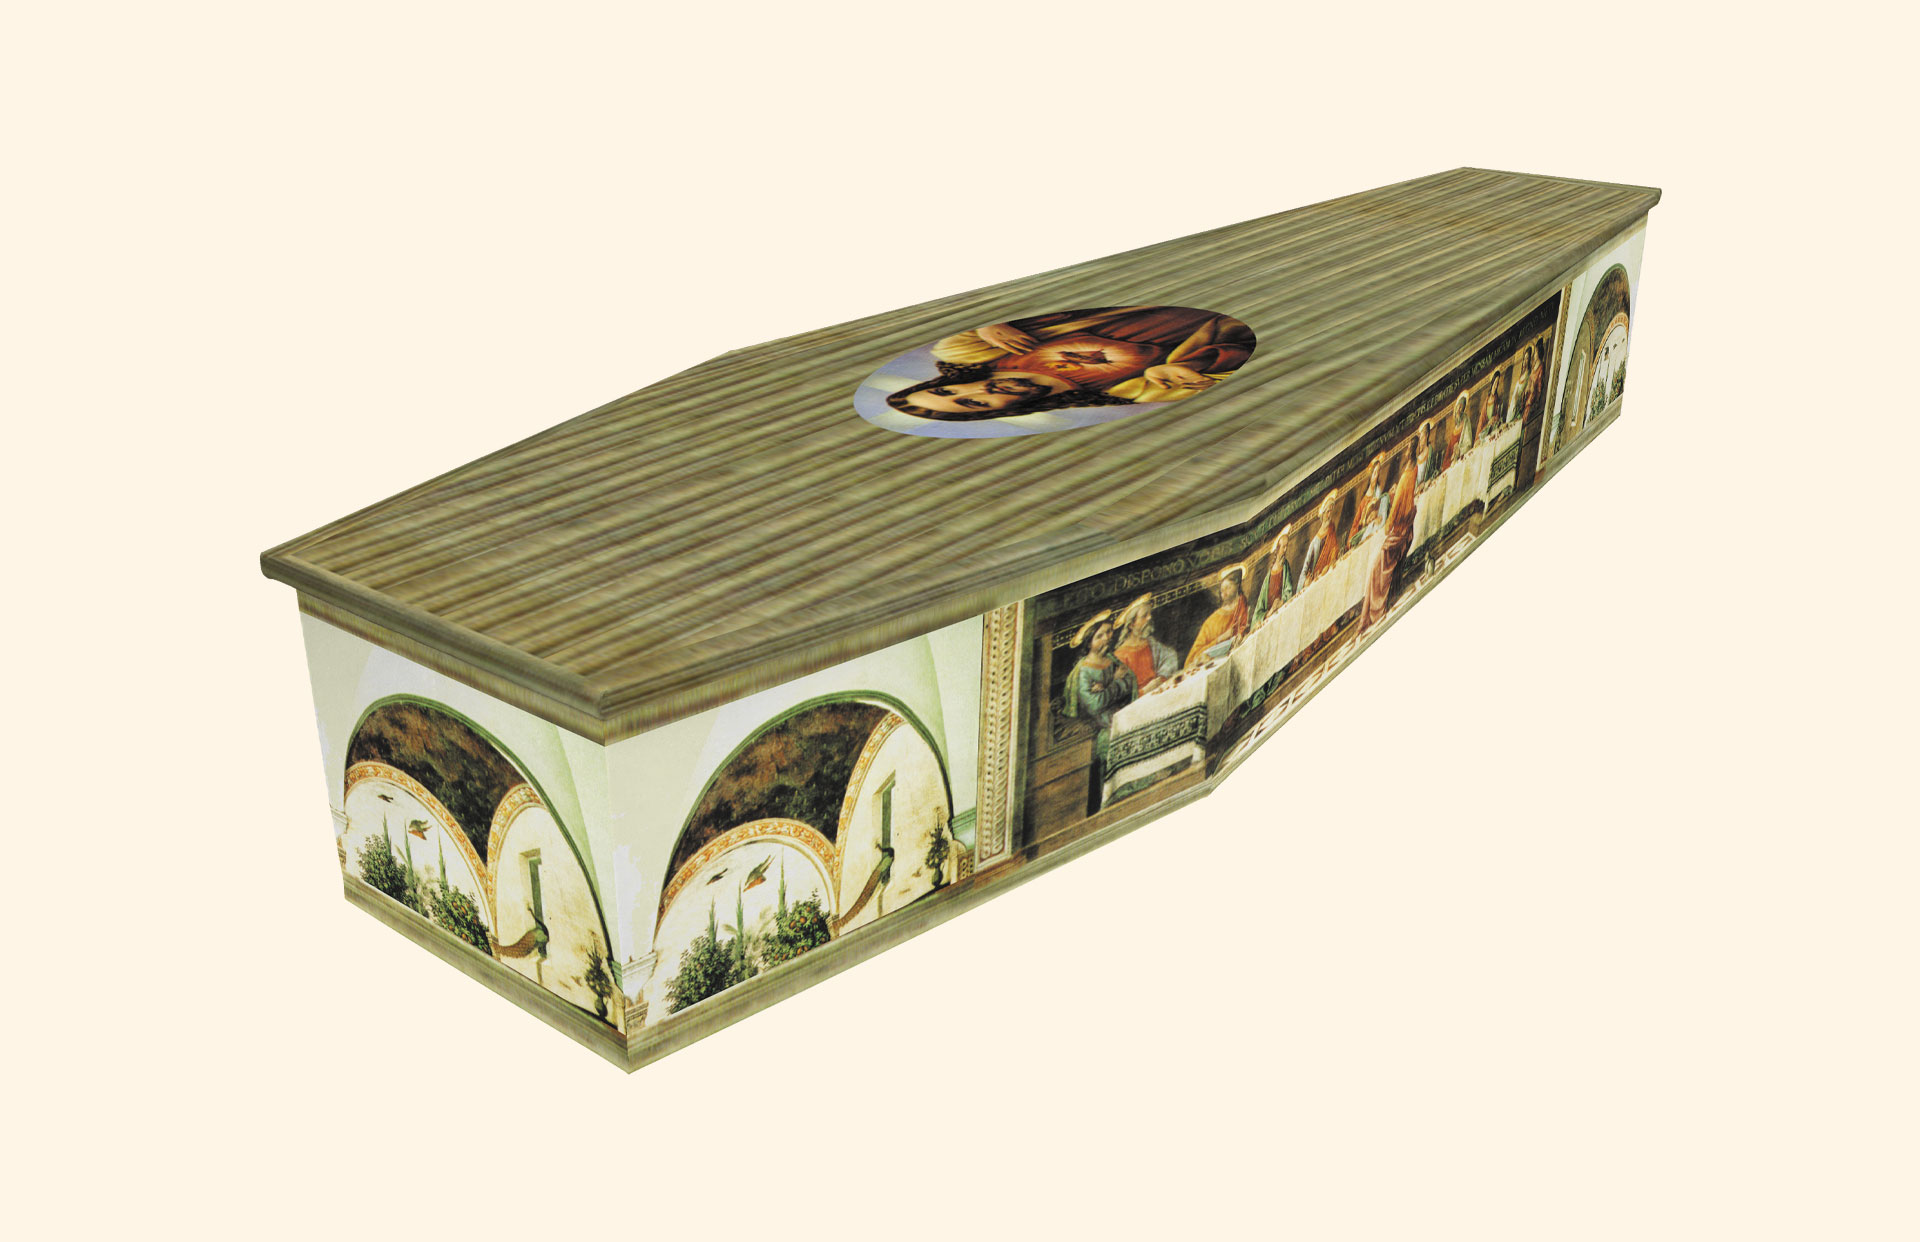 Last Supper design on a cardboard coffin